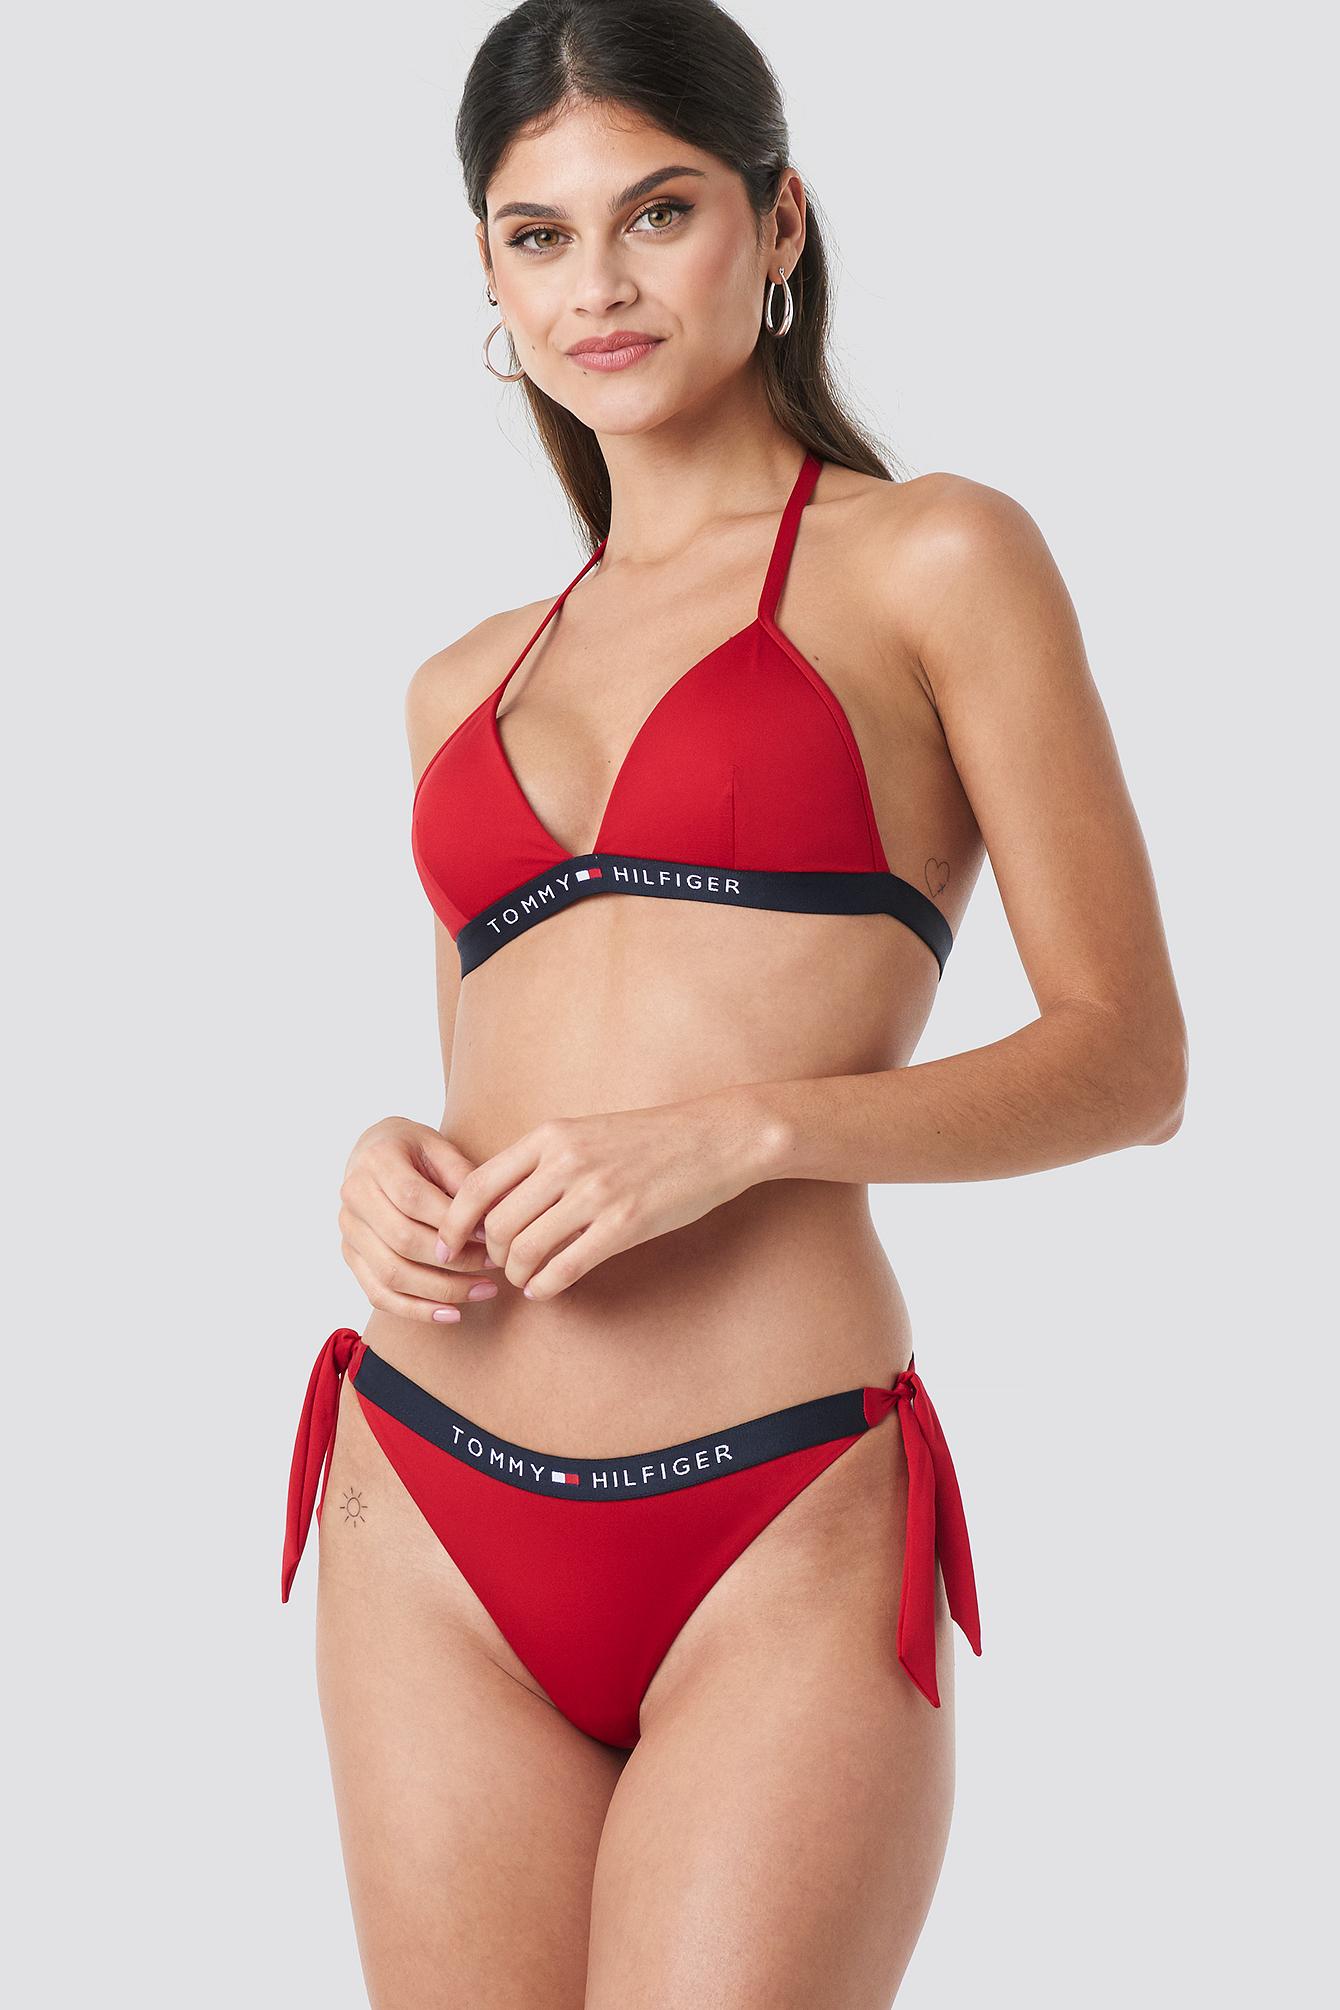 Tommy Hilfiger Red Swimsuit Hot Sale, 56% OFF | blountpartnership.com